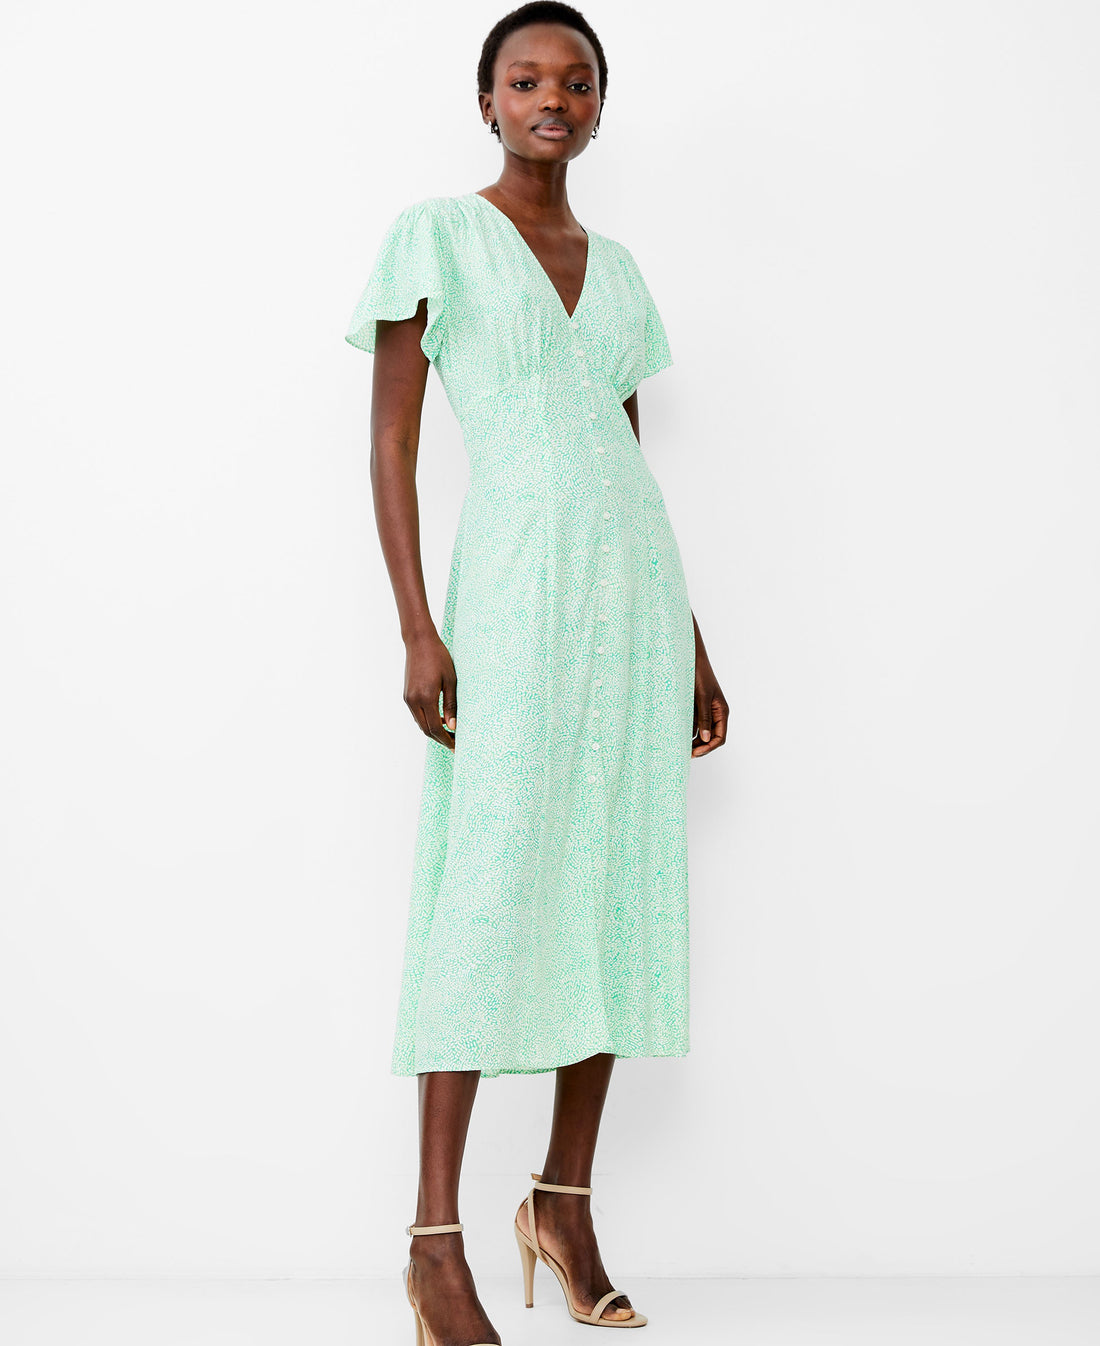 Bernice Tea Dress - Minted Green